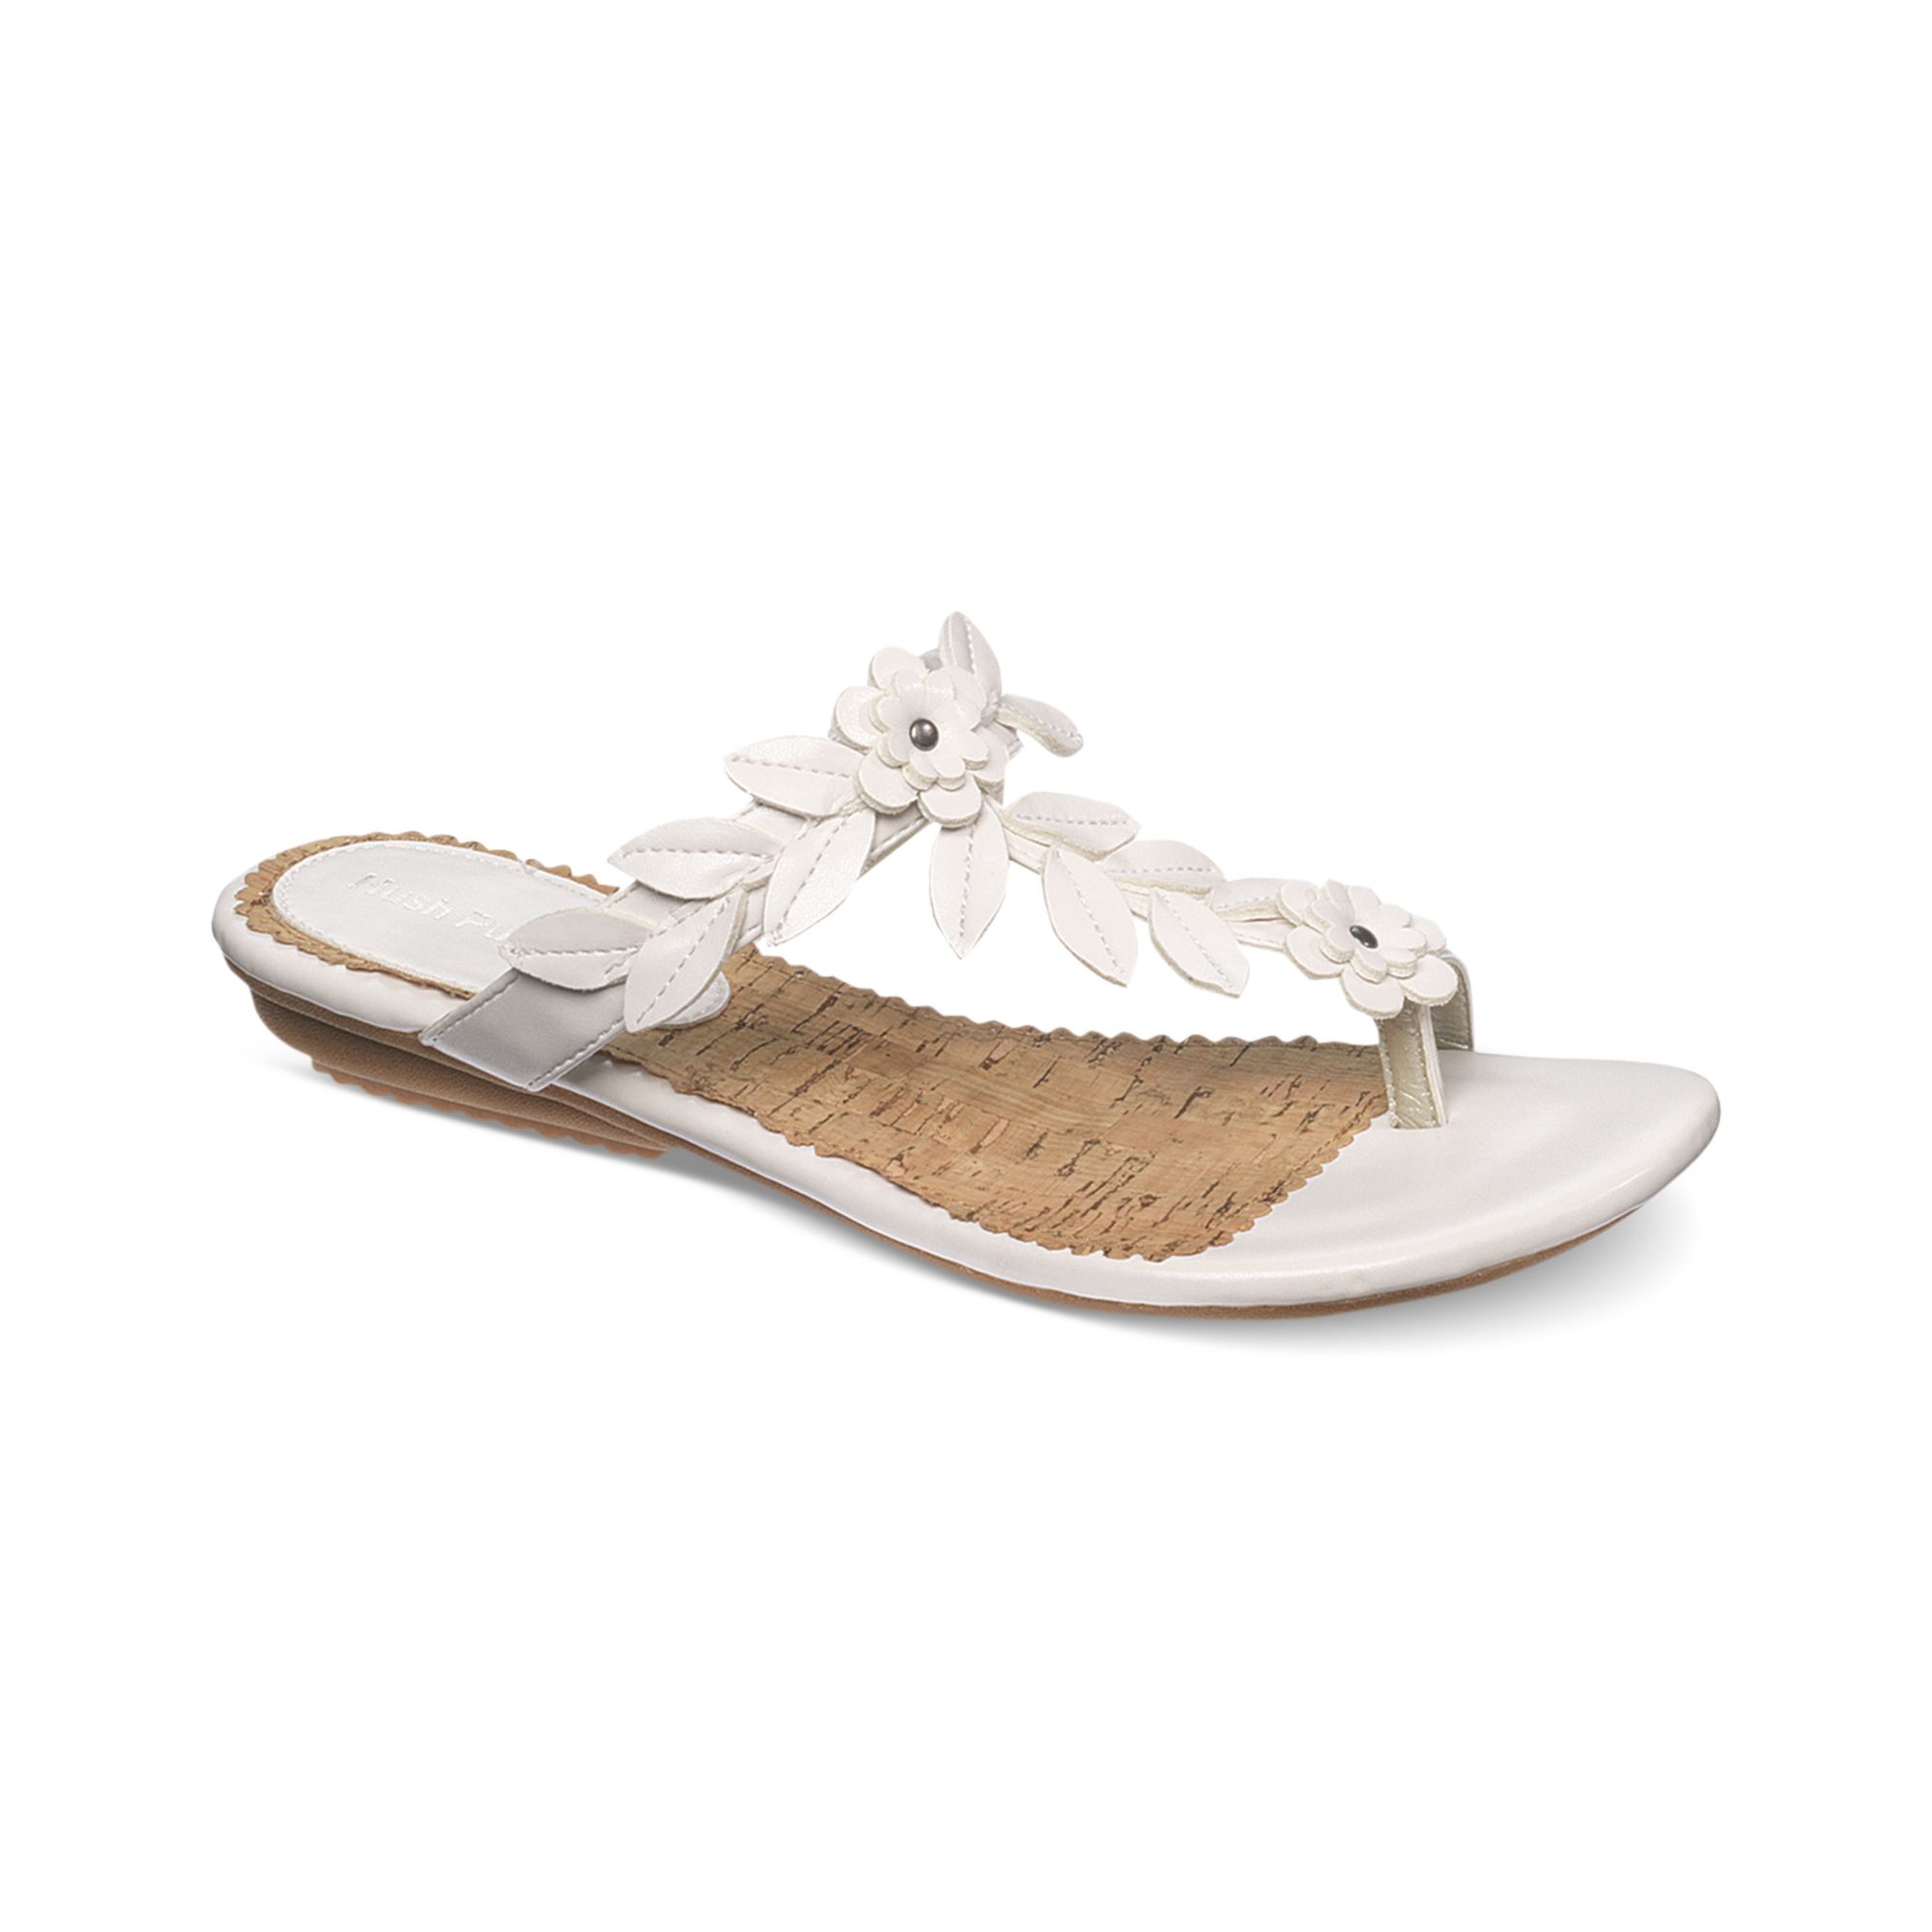 Hush PuppiesÂ® Corsica Toe Loop Flat Sandals in White